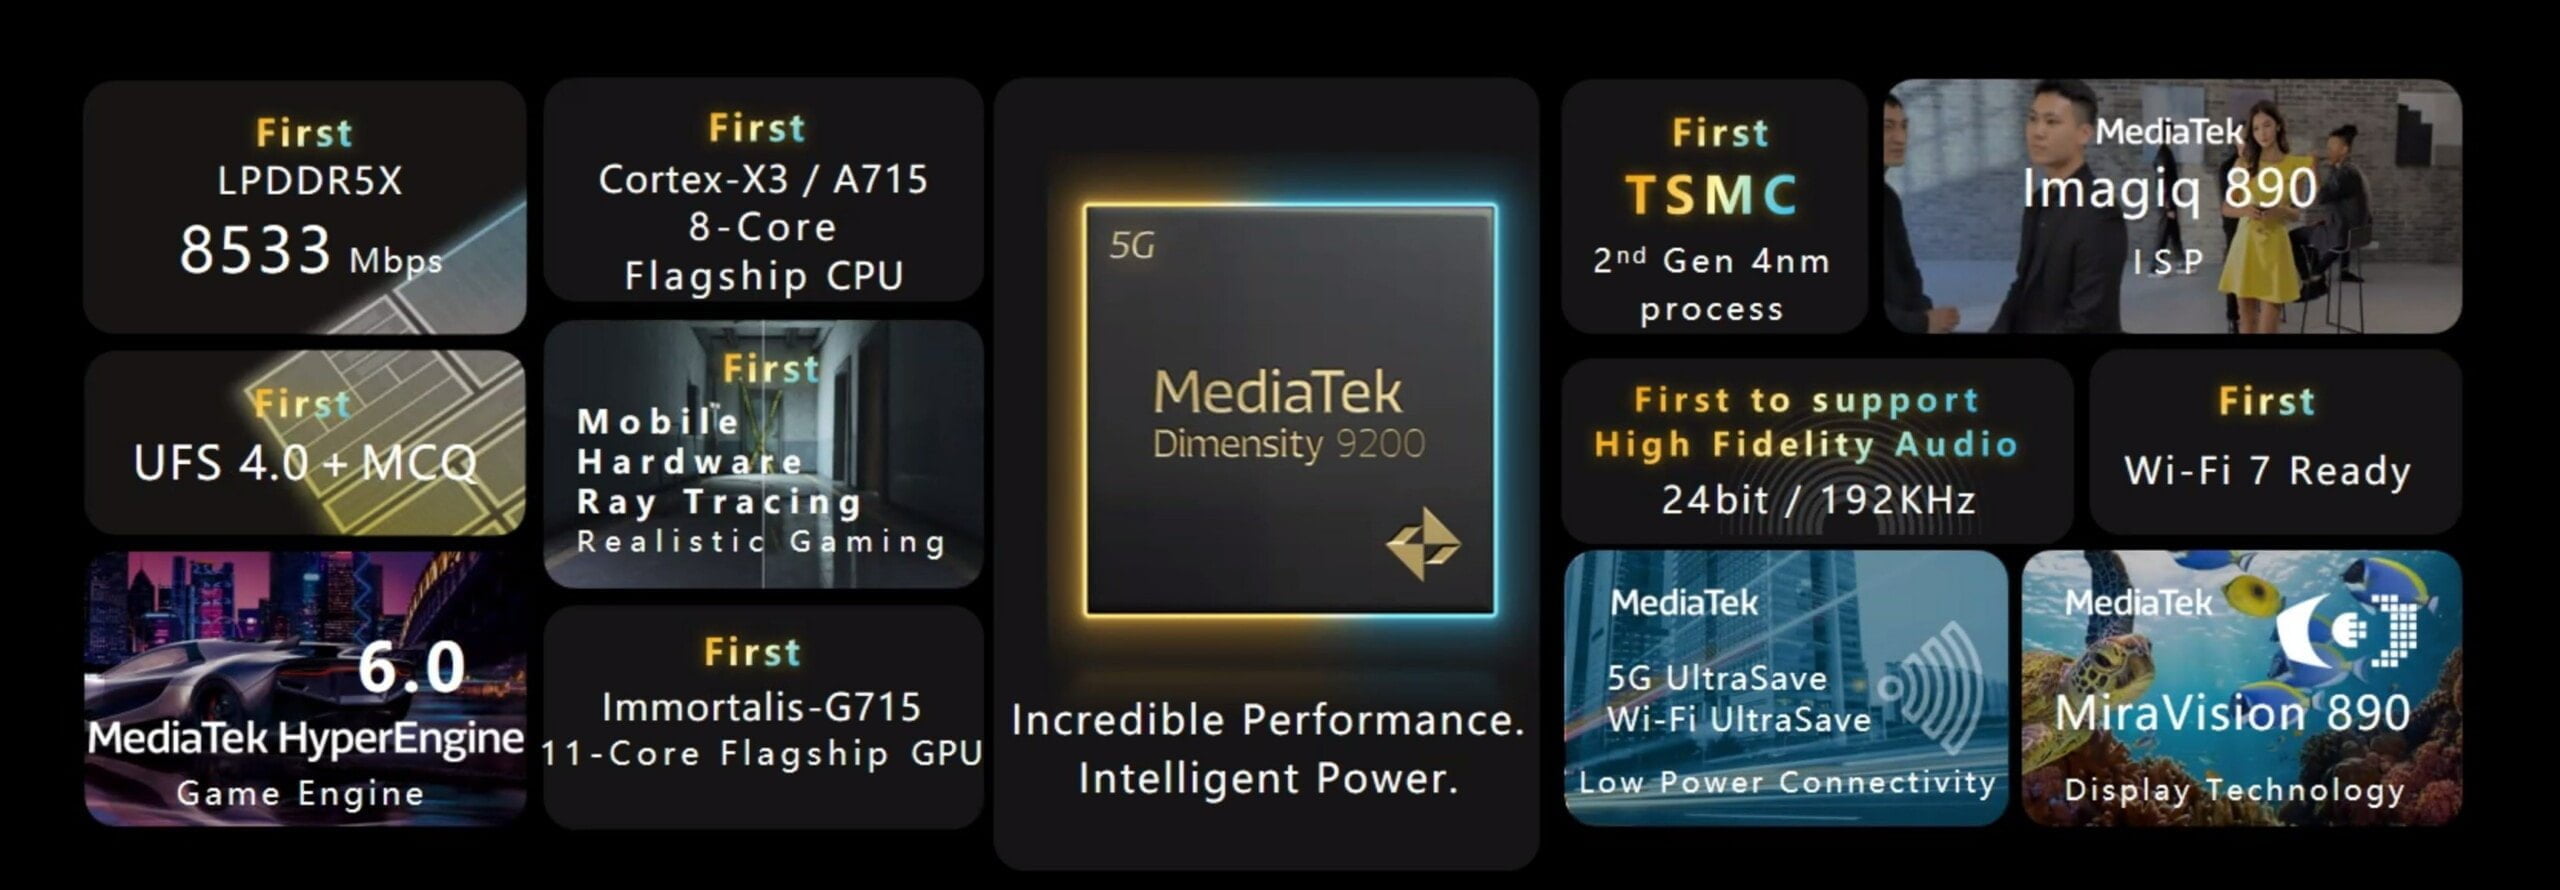 MediaTek Dimensity 9200 Announced with Arm Cortex X3 & Immortalis G715 GPU